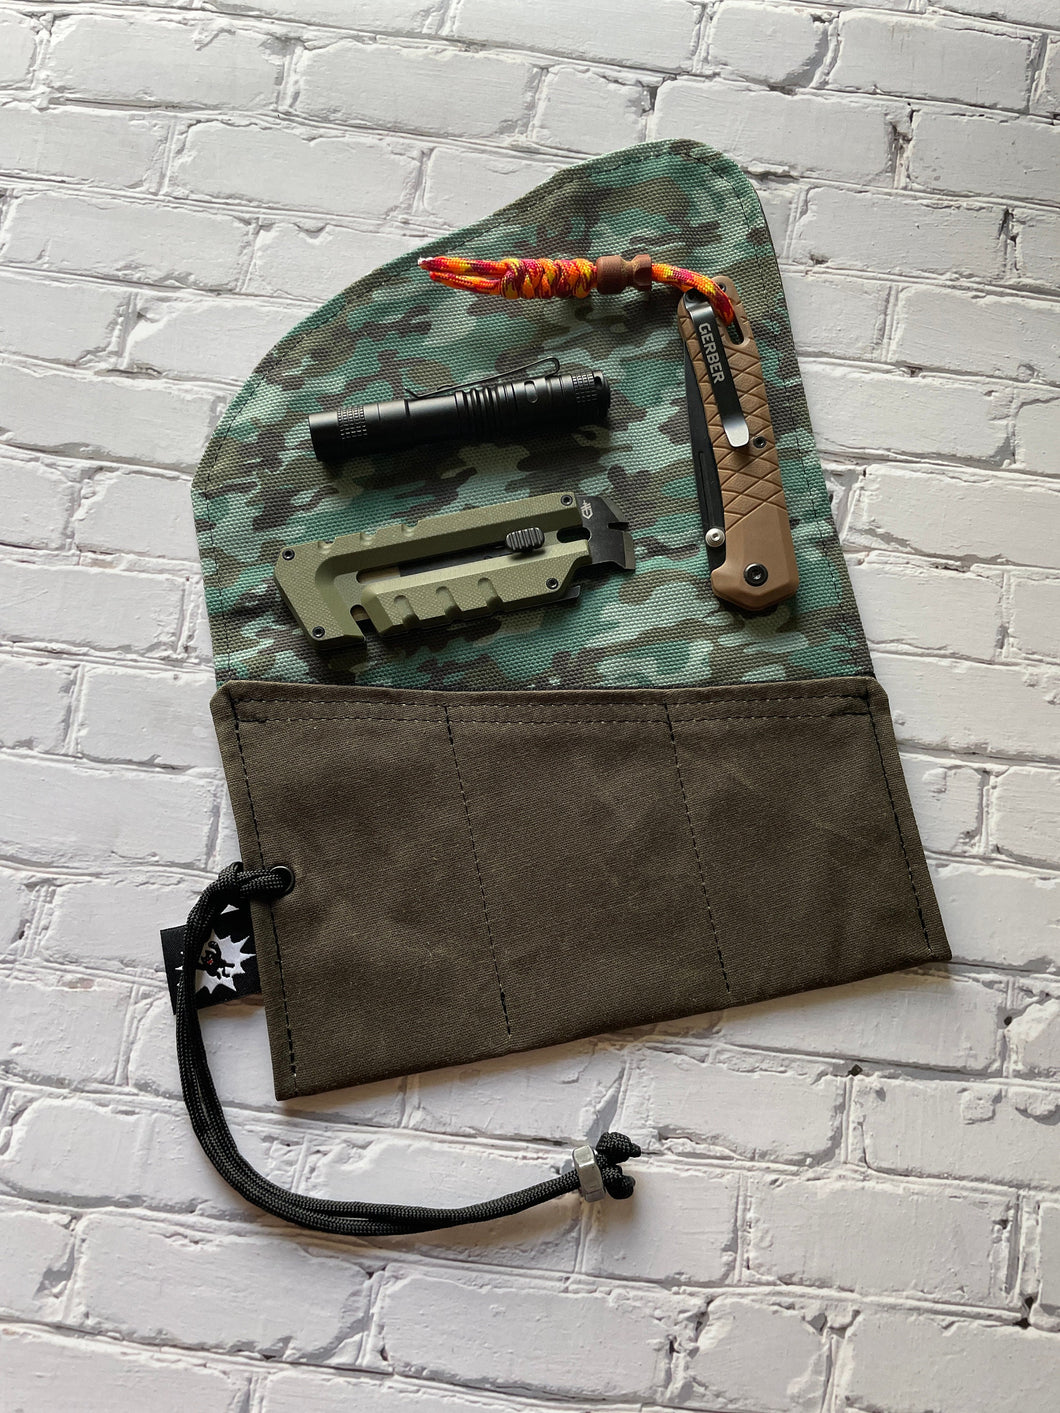 EDC Tool Roll | Waxed Canvas Tool Pouch | Every Day Carry Gear Bag | Pocket Organizer | Knife Roll | Pocket Dump Display Hank | Blue Camo